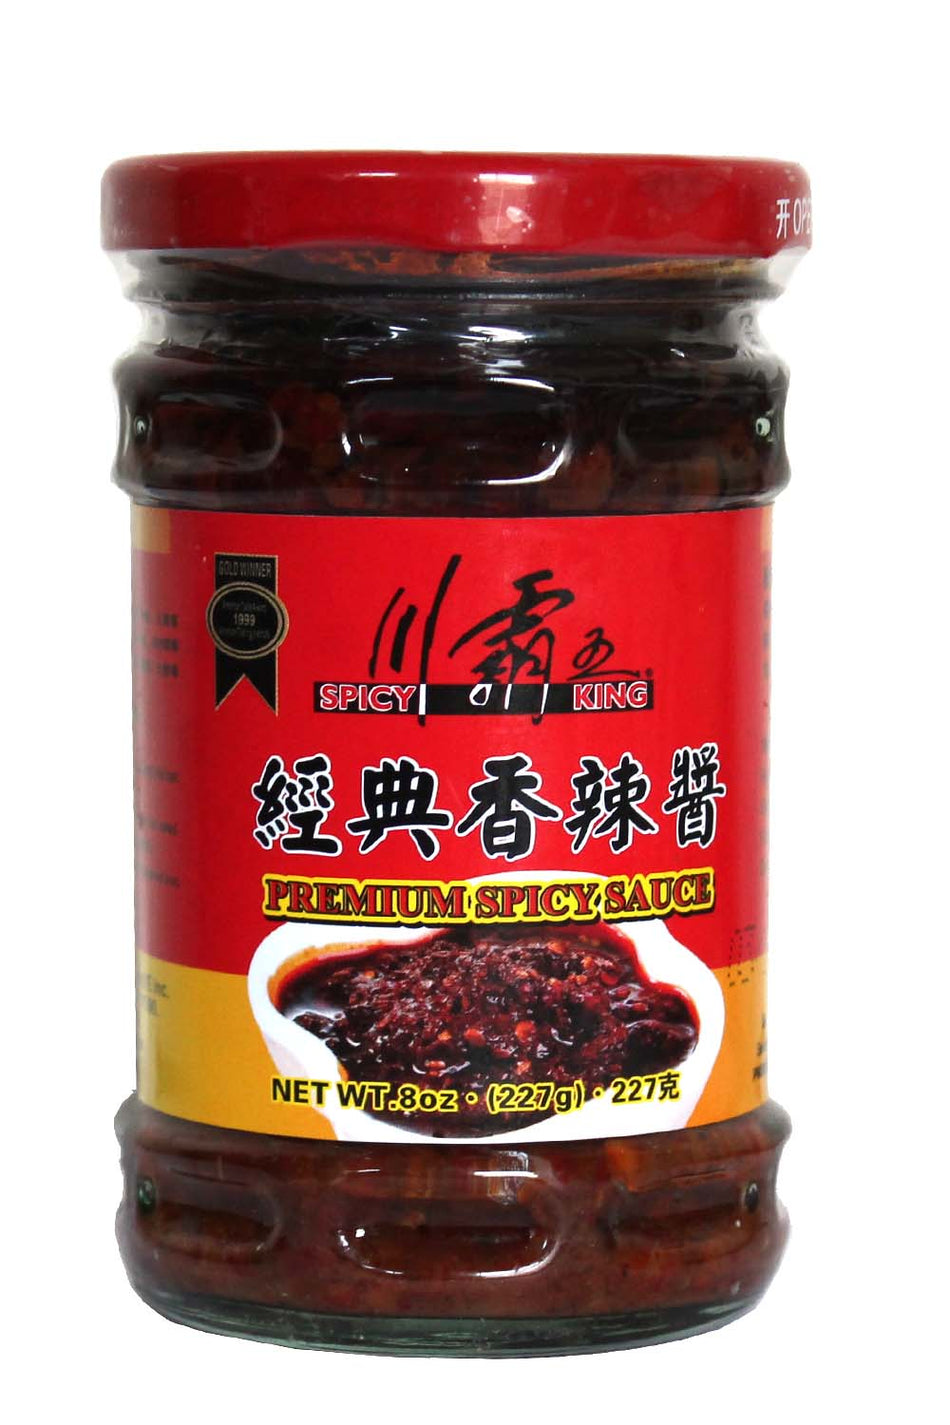 Spicy King  Szechuan Premium Spicy  Sauce